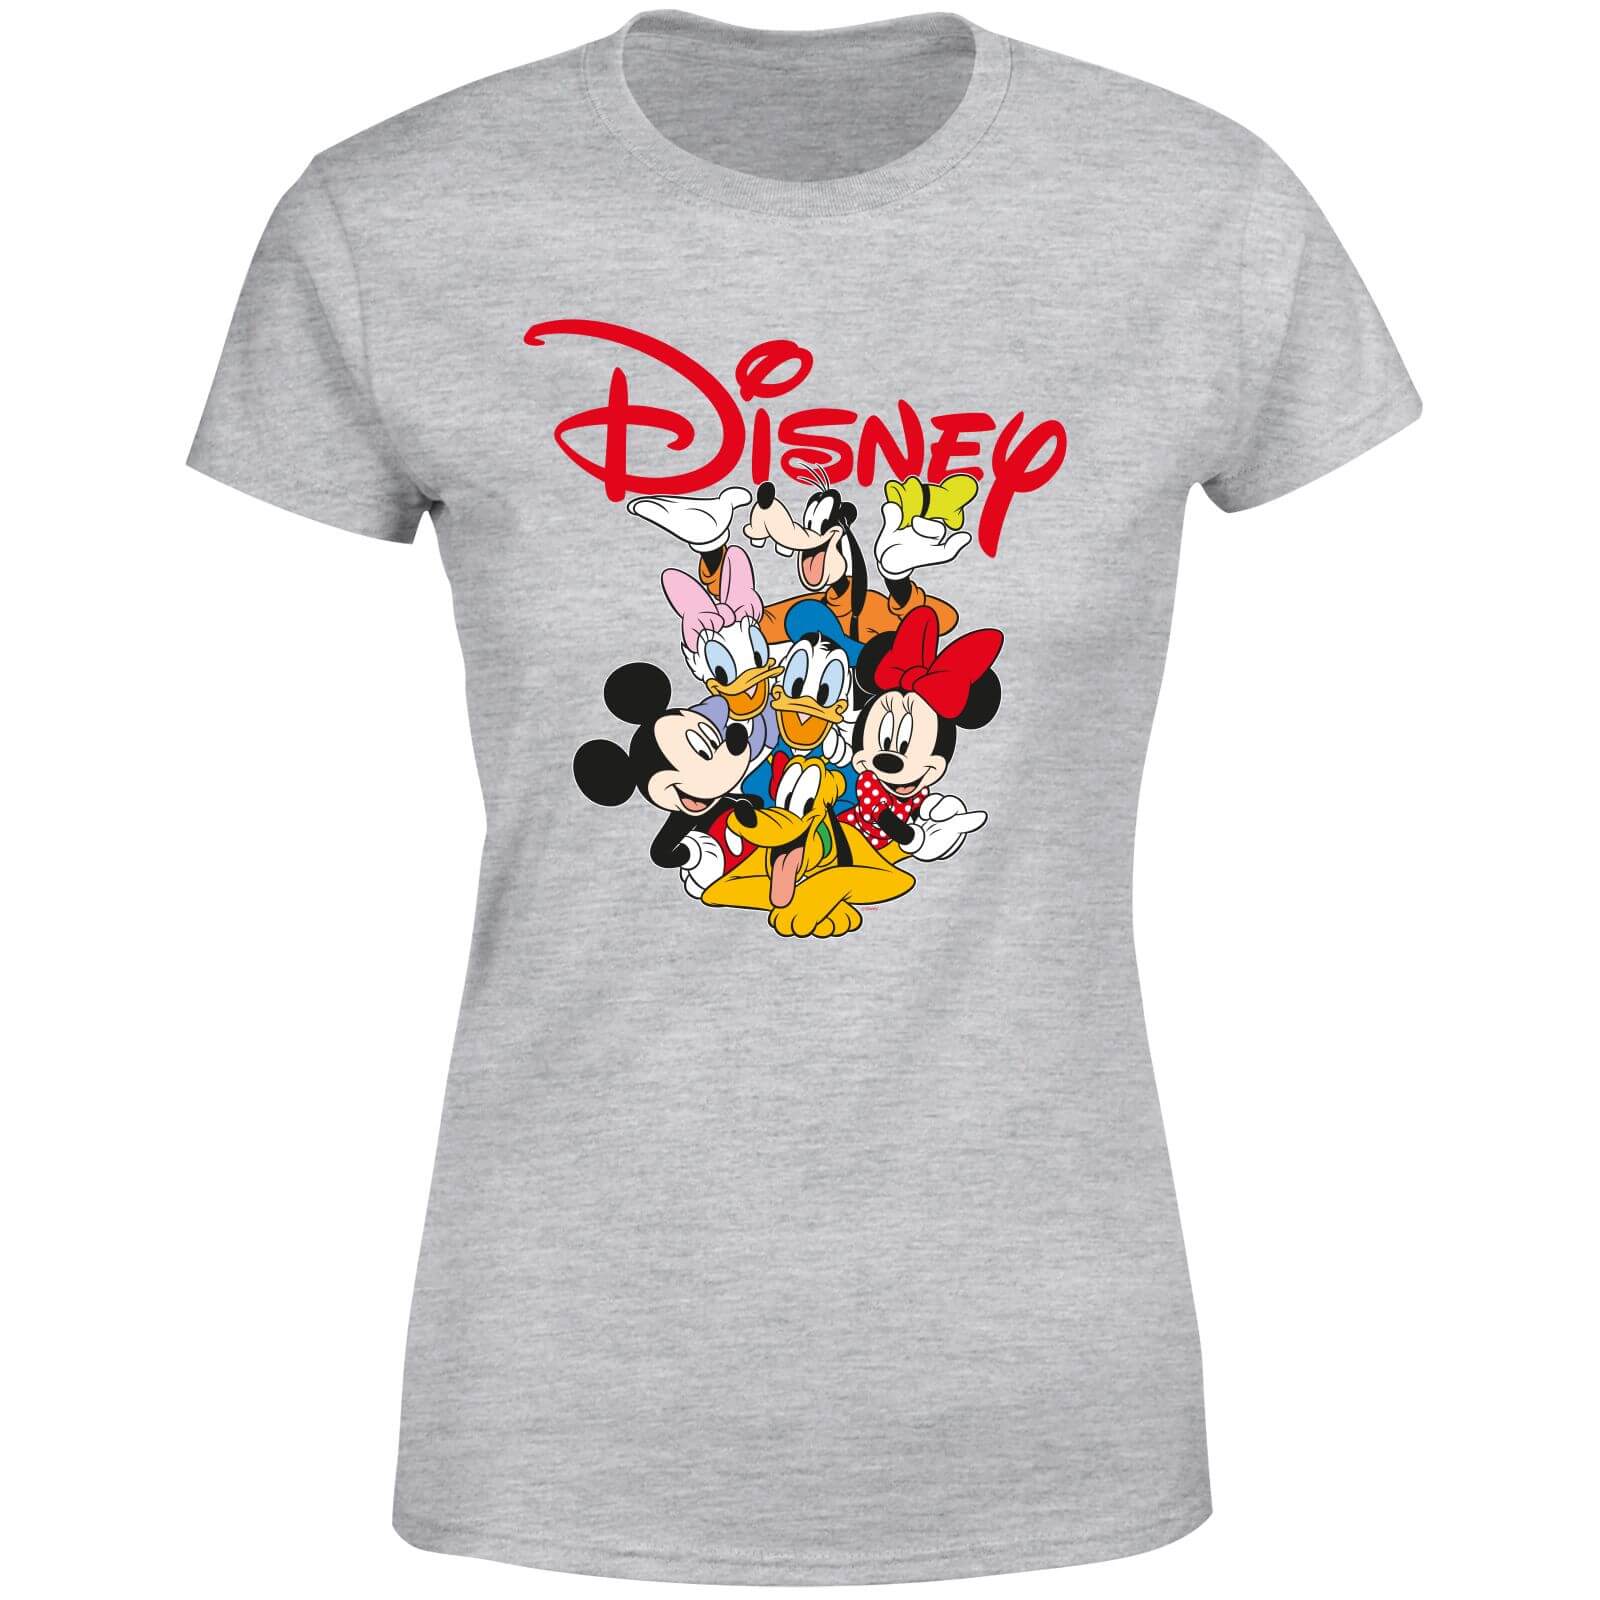 Mickey Mouse Disney Crew Women's T-Shirt - Grey - L